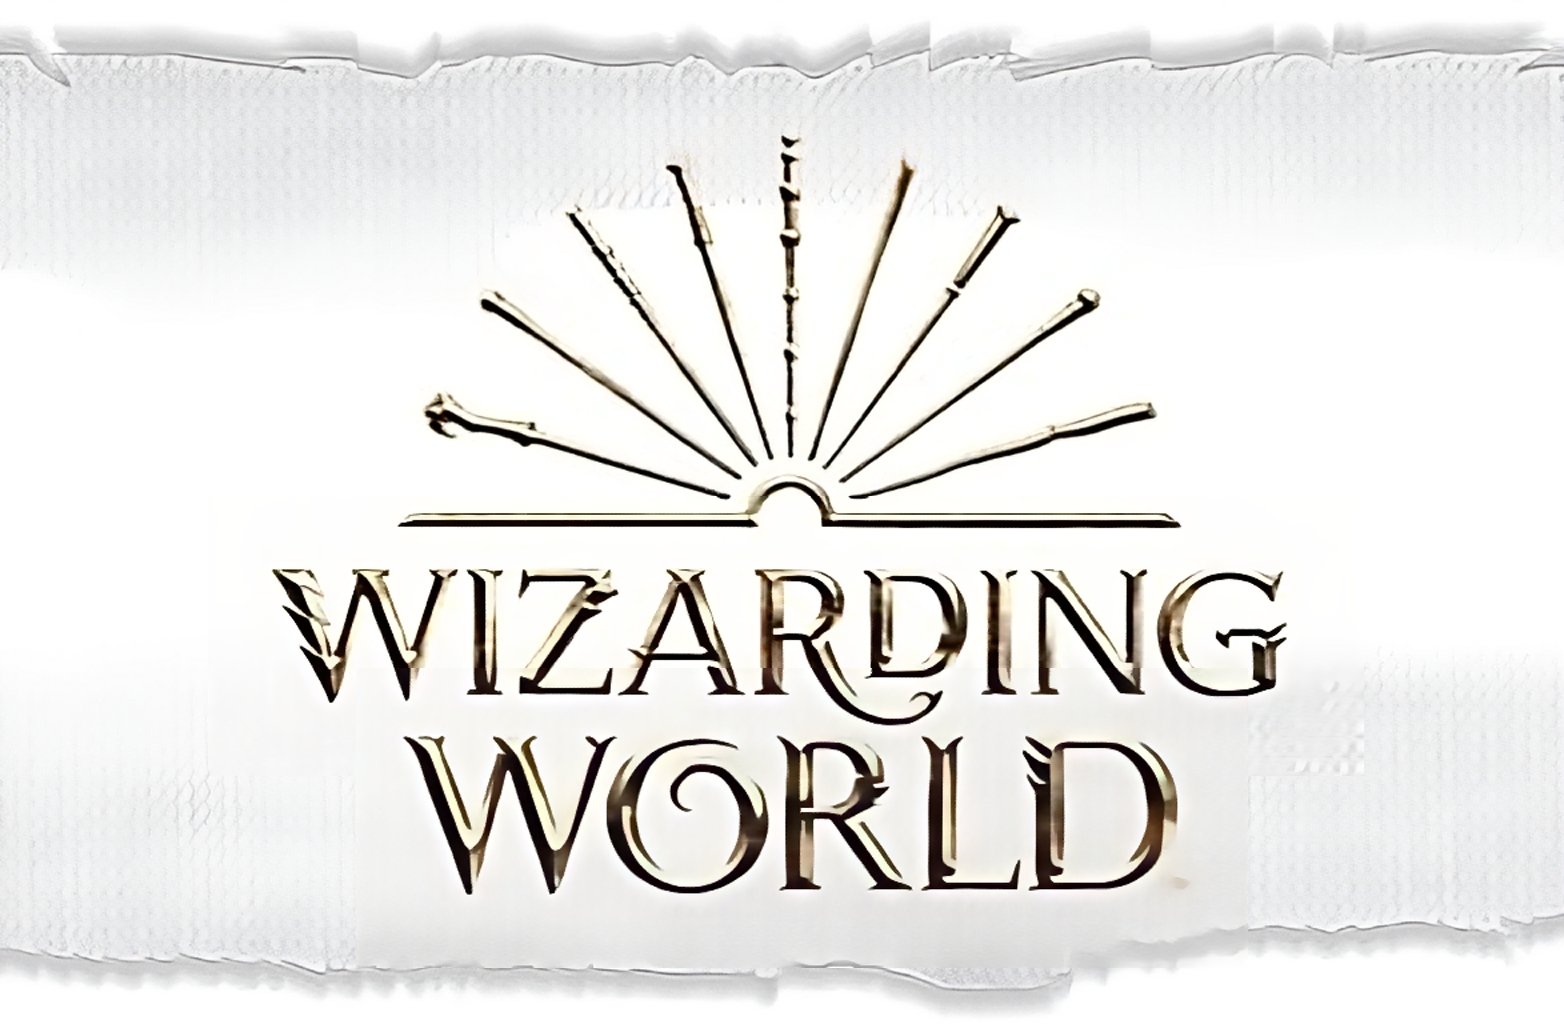 Wizarding World - Arditex S.A.